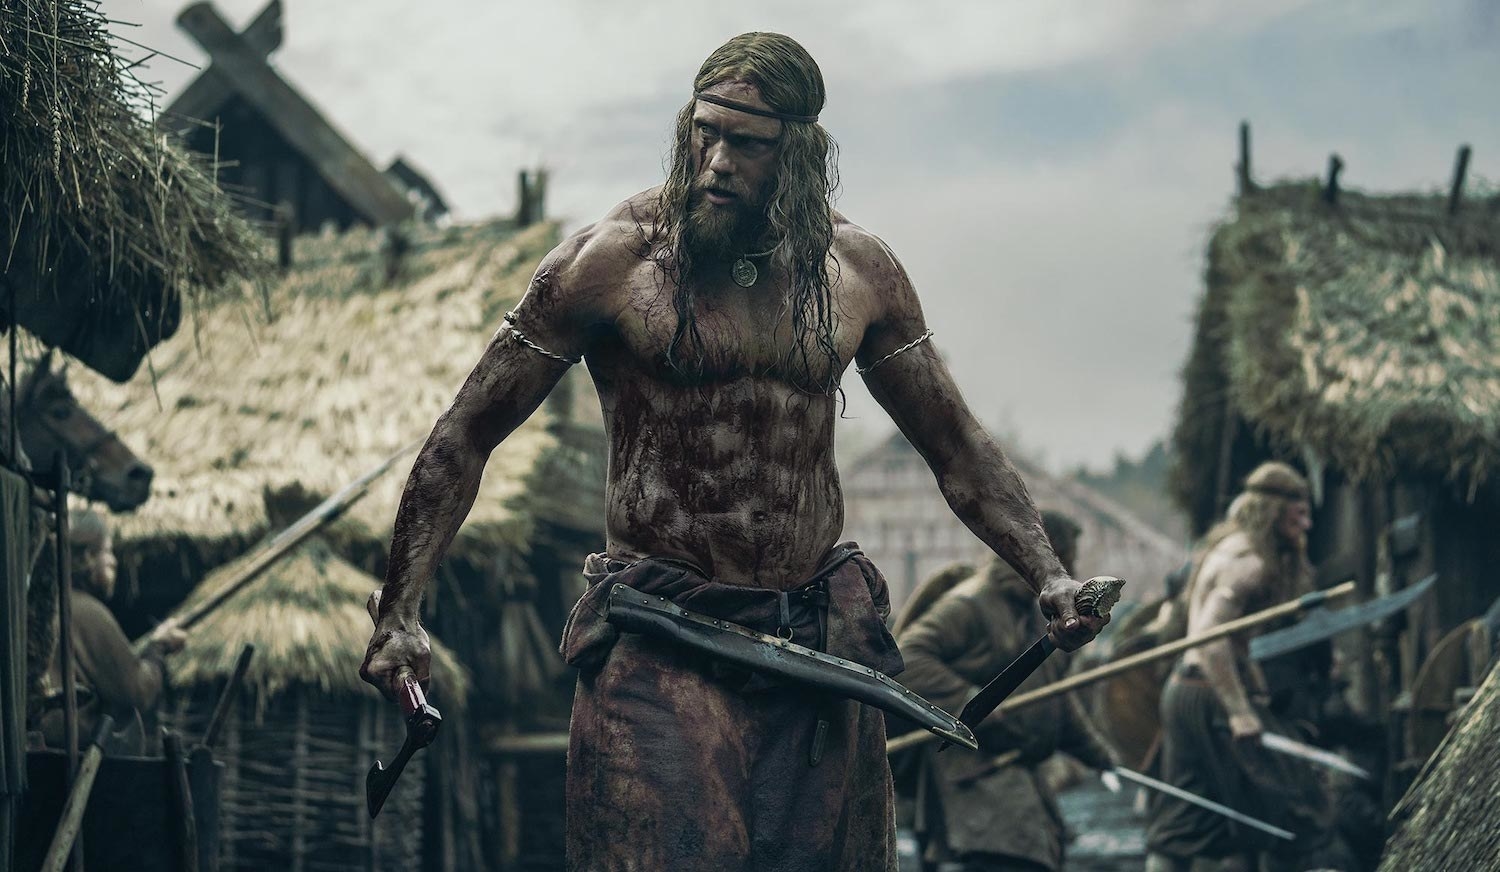 Alexander Skarsgård as a Viking prince in The Northman